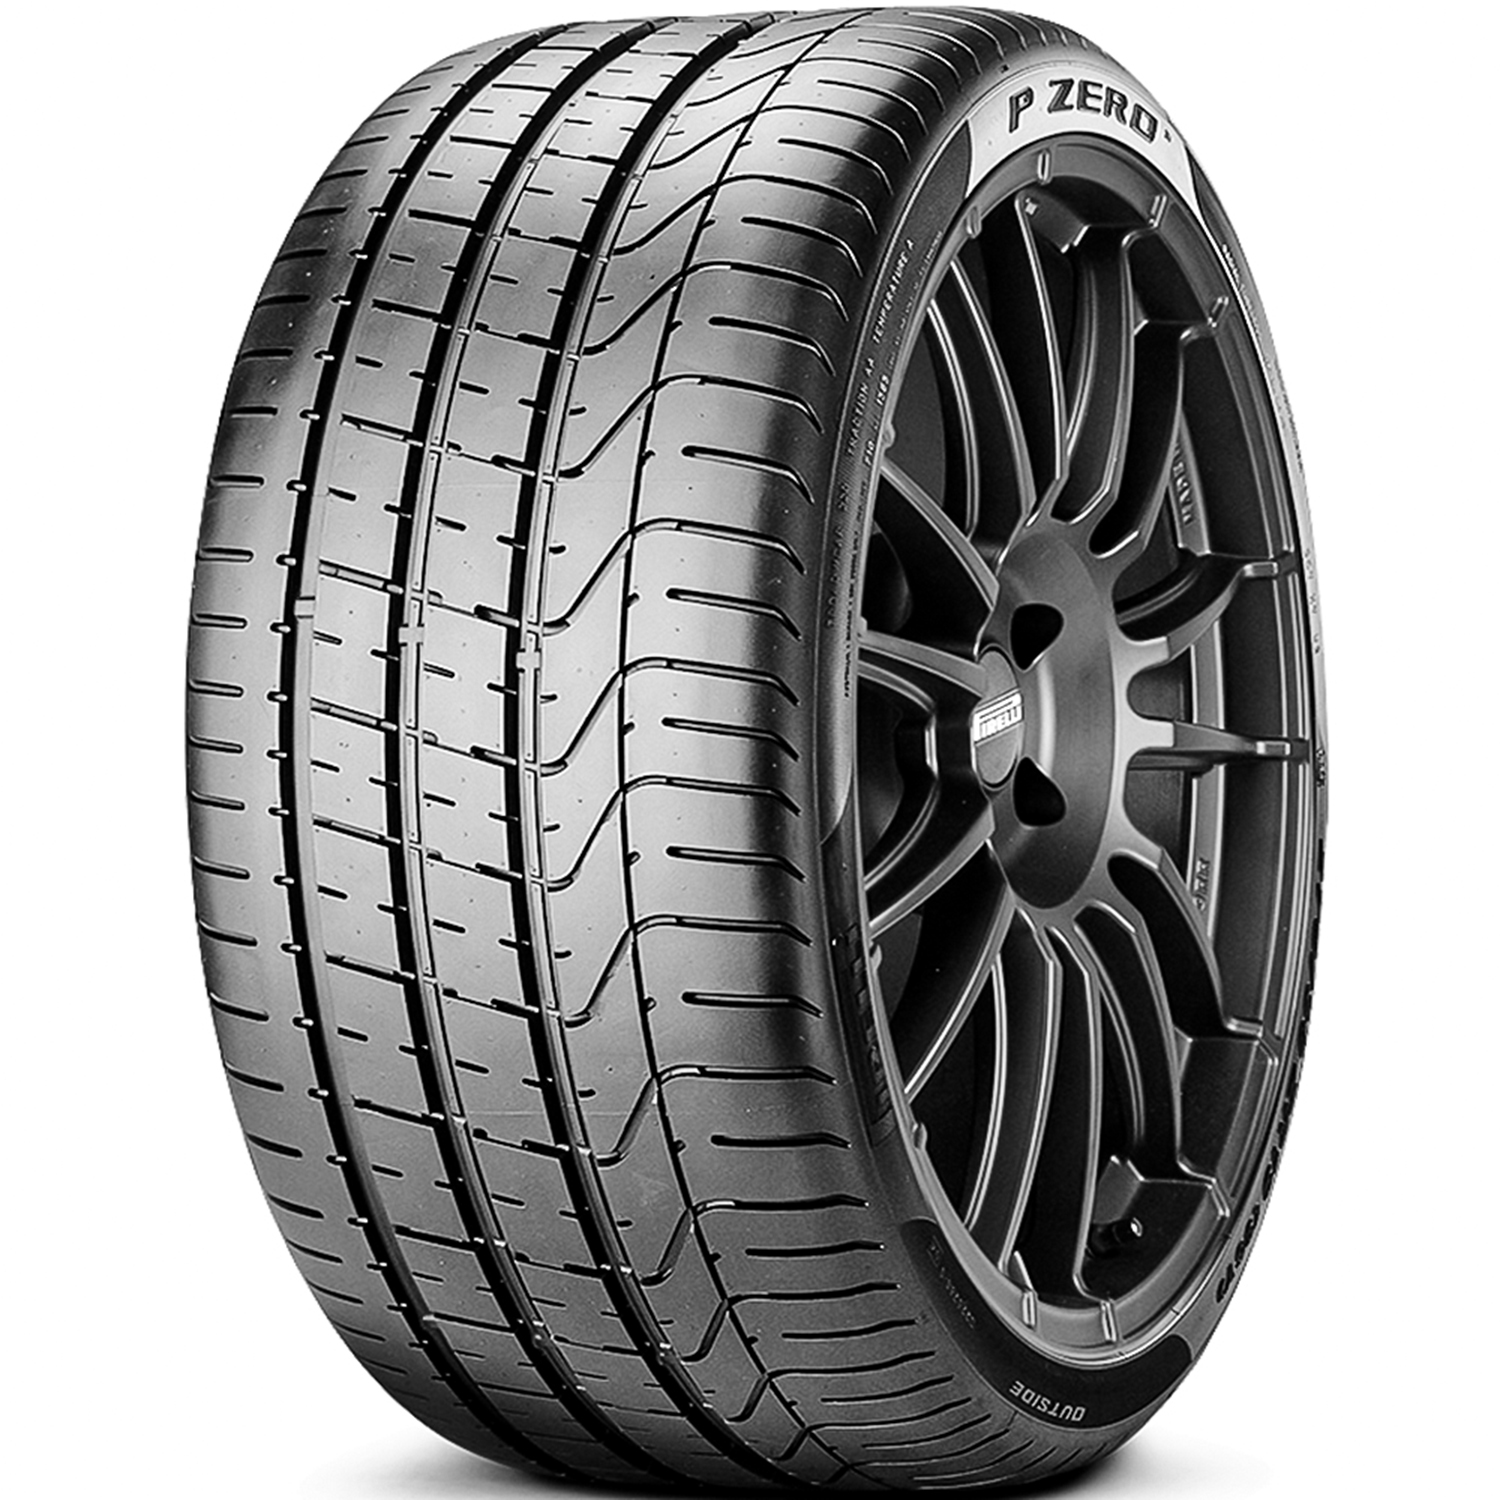 Pirelli Tire Pirelli P Zero 245/35ZR20 95Y XL (AMS) High Performance